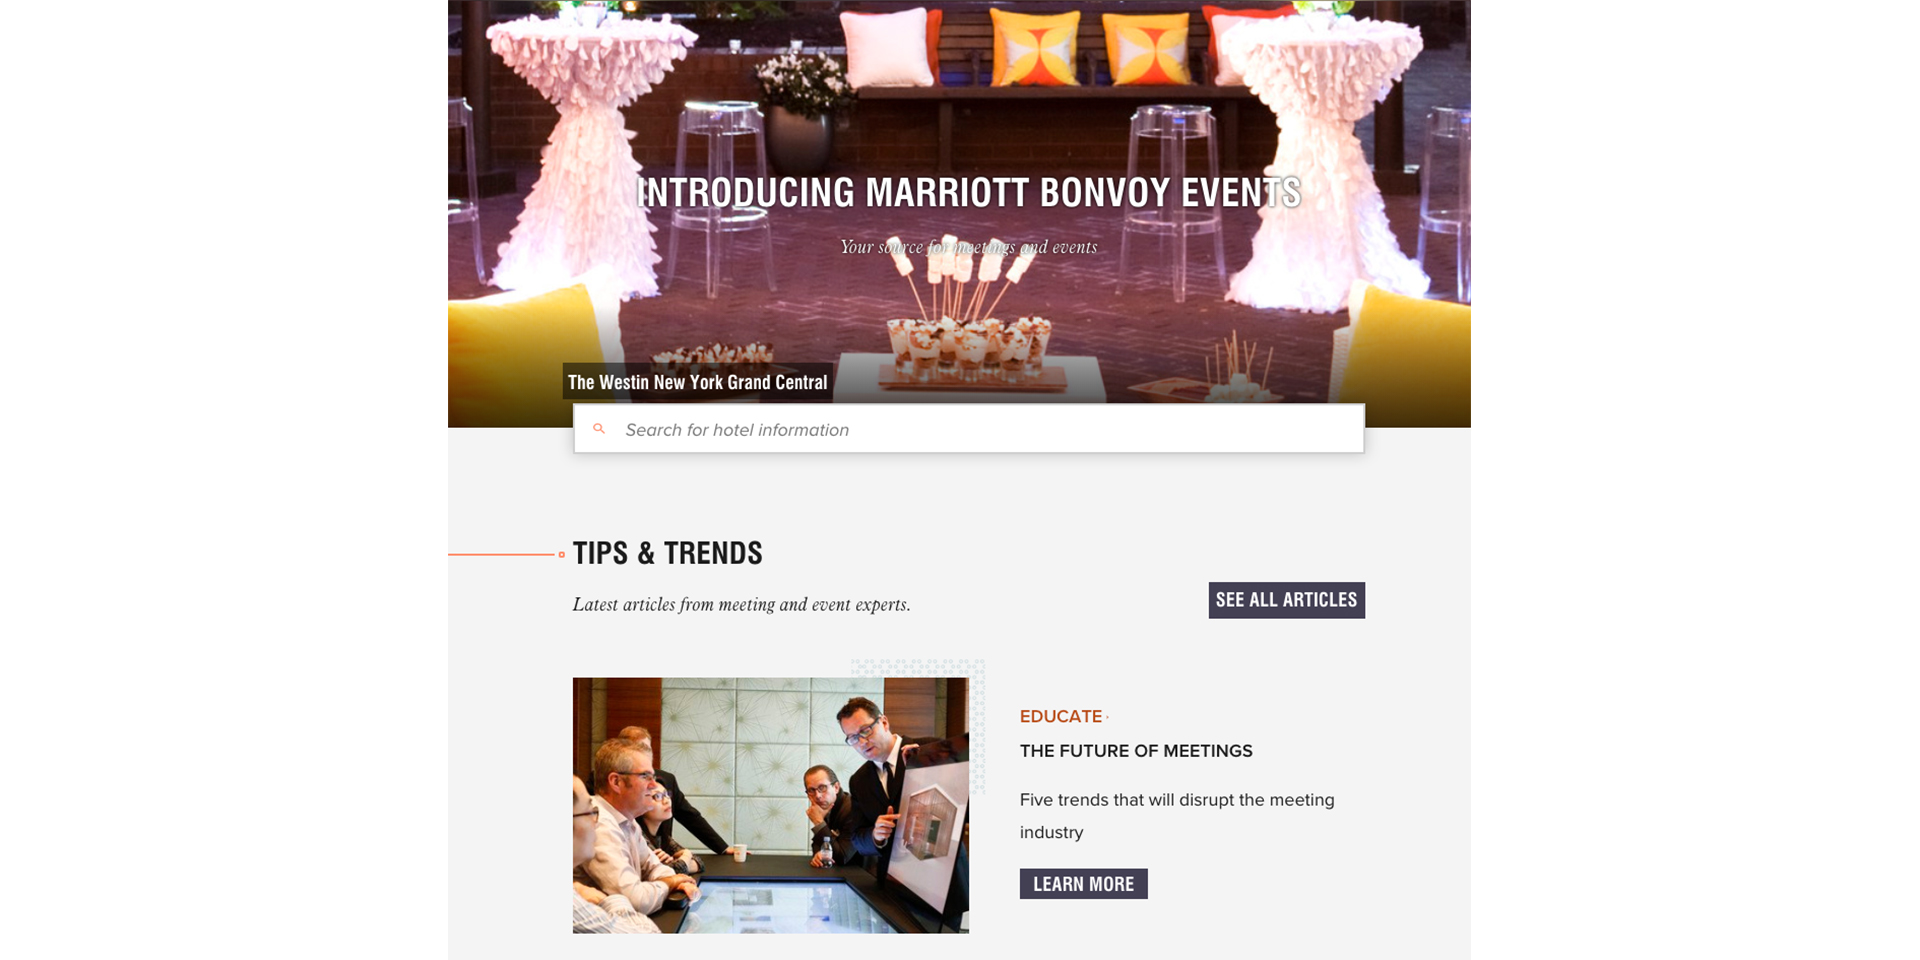 Marriott unveils new event platform